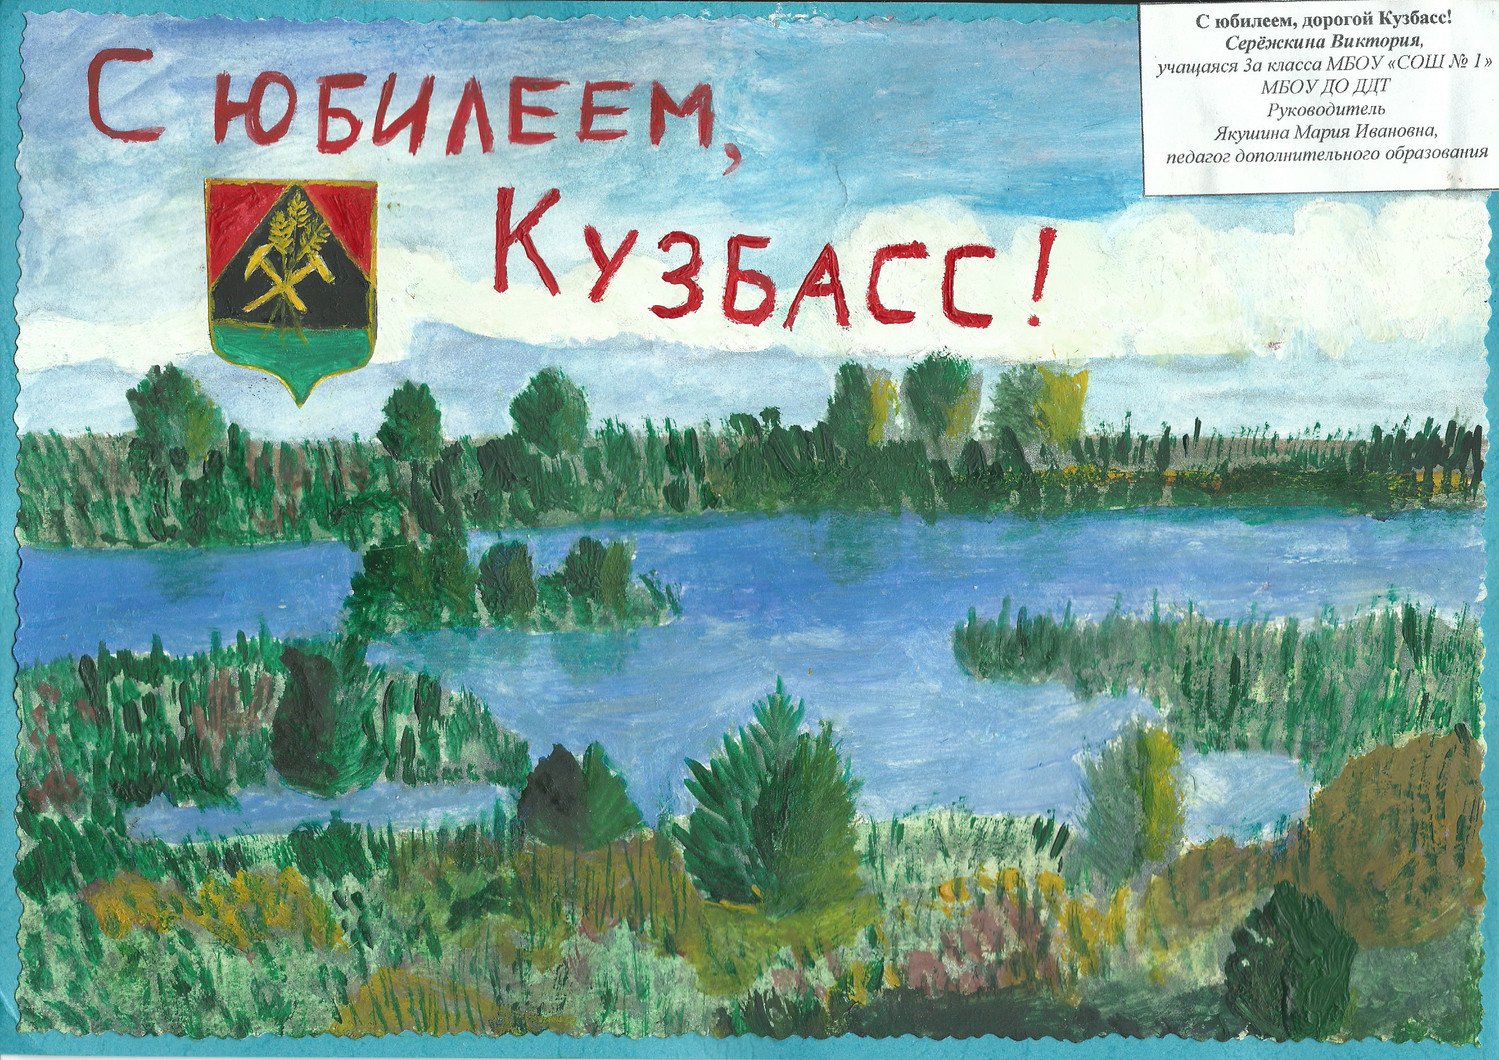 Конкурс рисунков к 300 летию Кузбасса